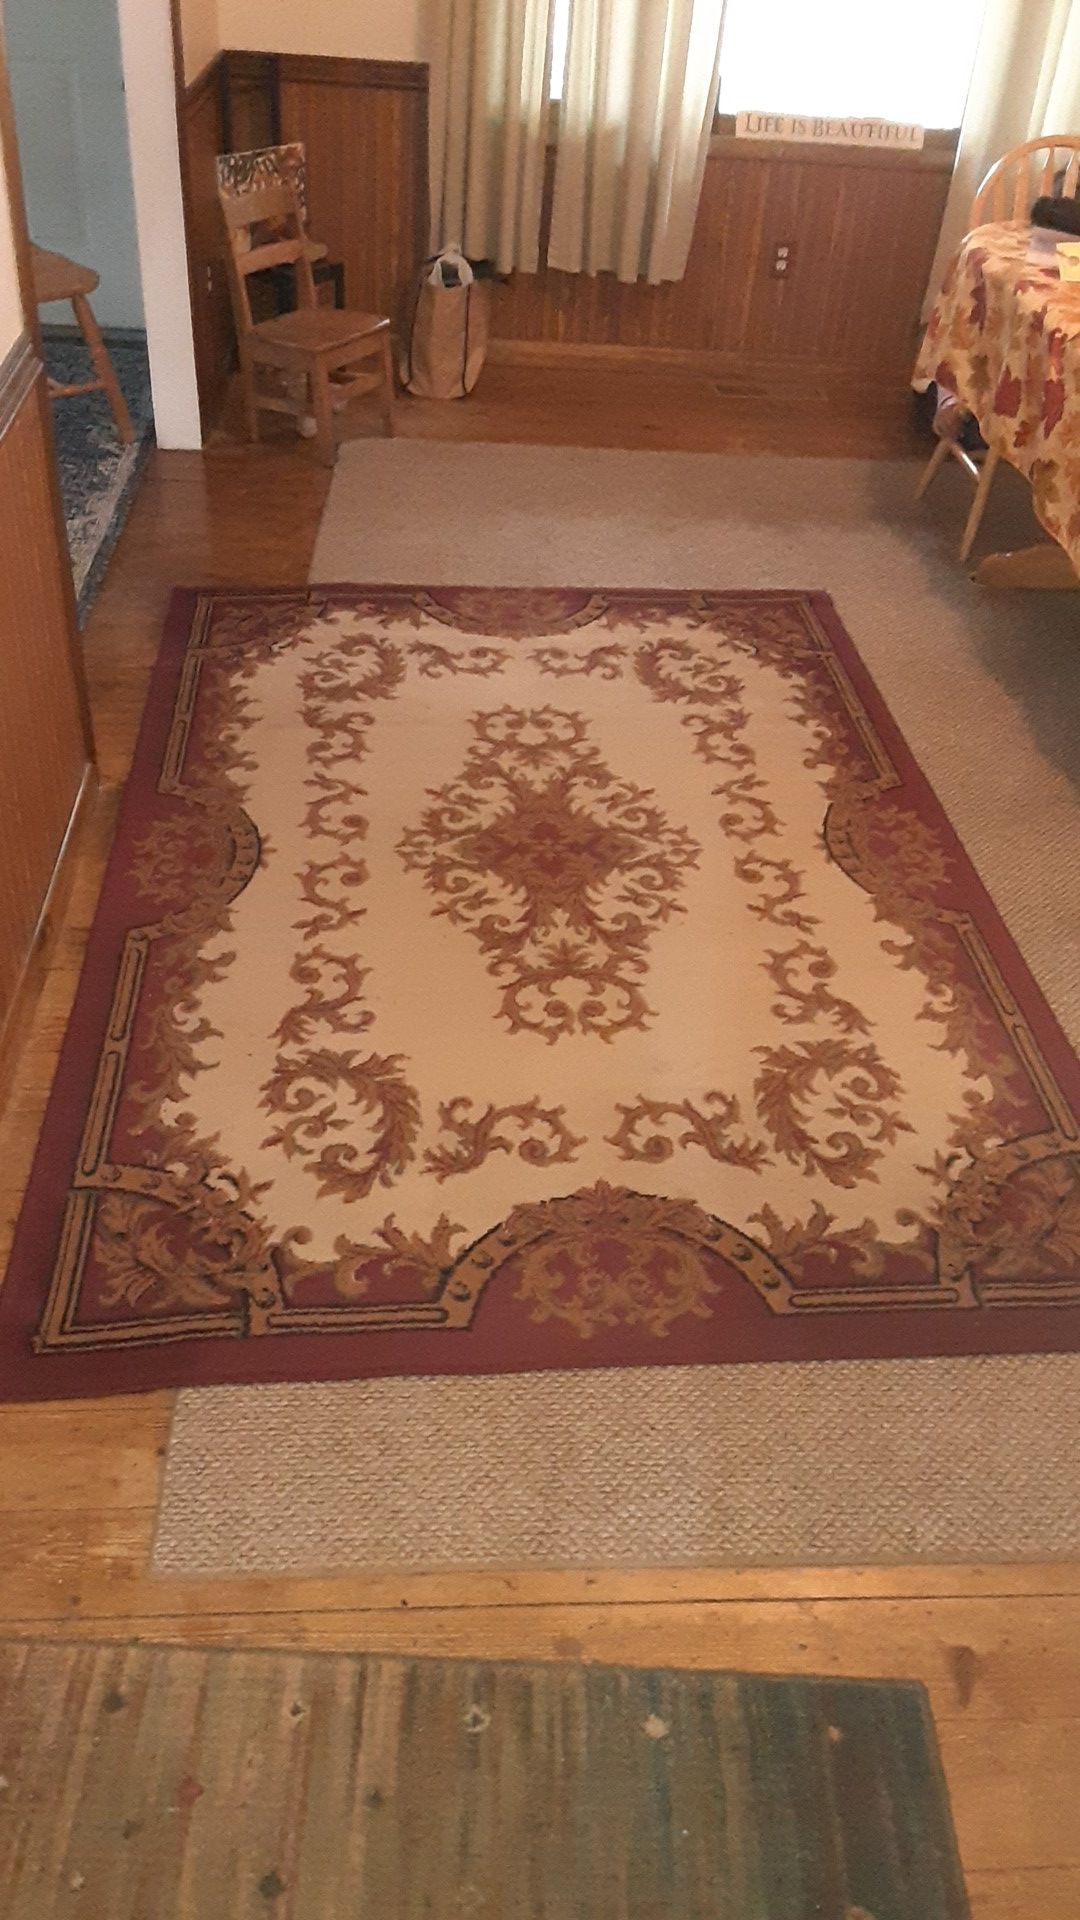 Antique American made area rug